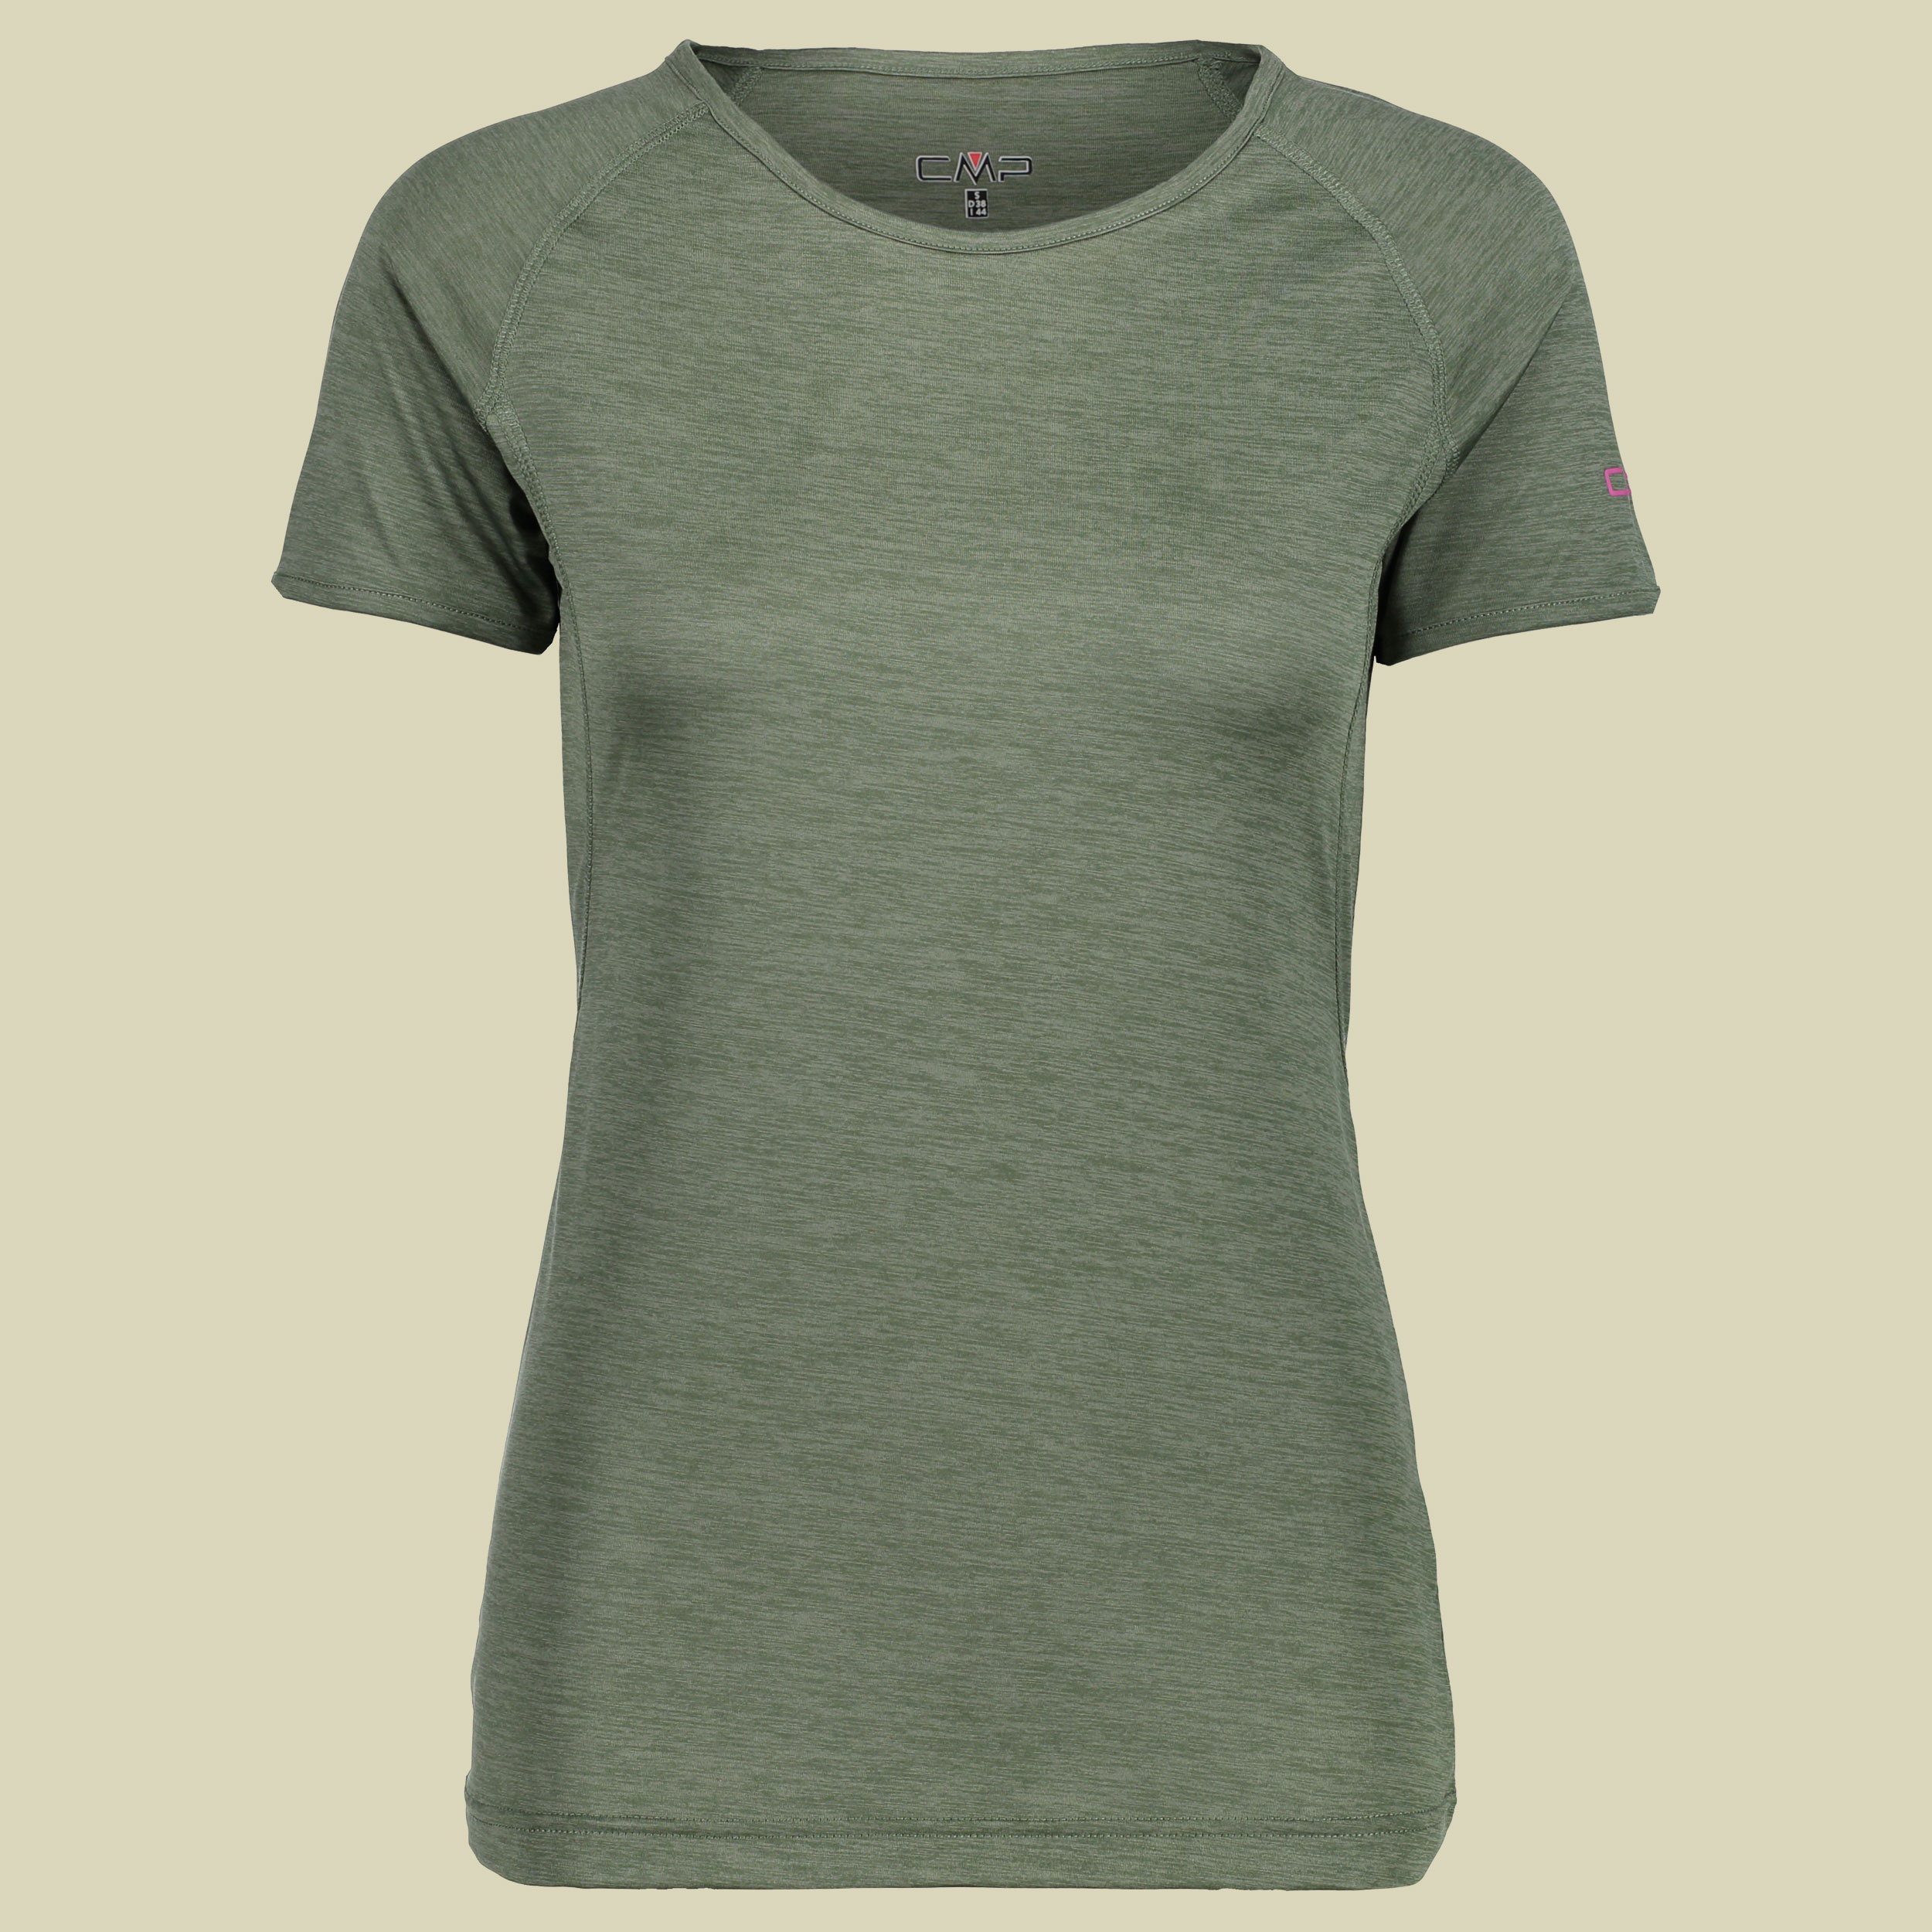 Woman T-Shirt Jersey Melange 38T6706 Größe 36 Farbe avocado melange F830